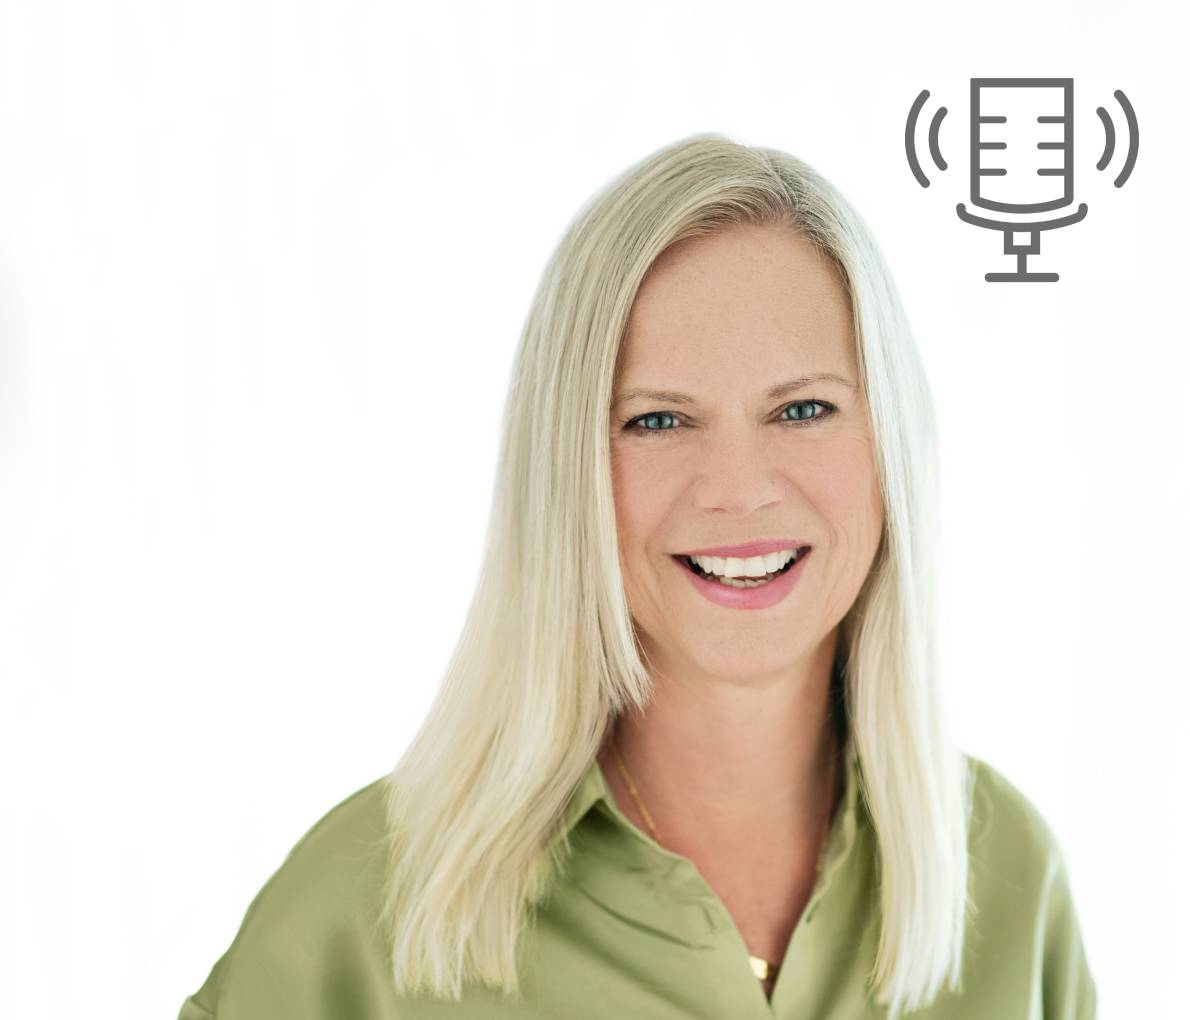 Go-To Grandma podcast host Kathy Buckworth smiling, wearing a light green shirt.